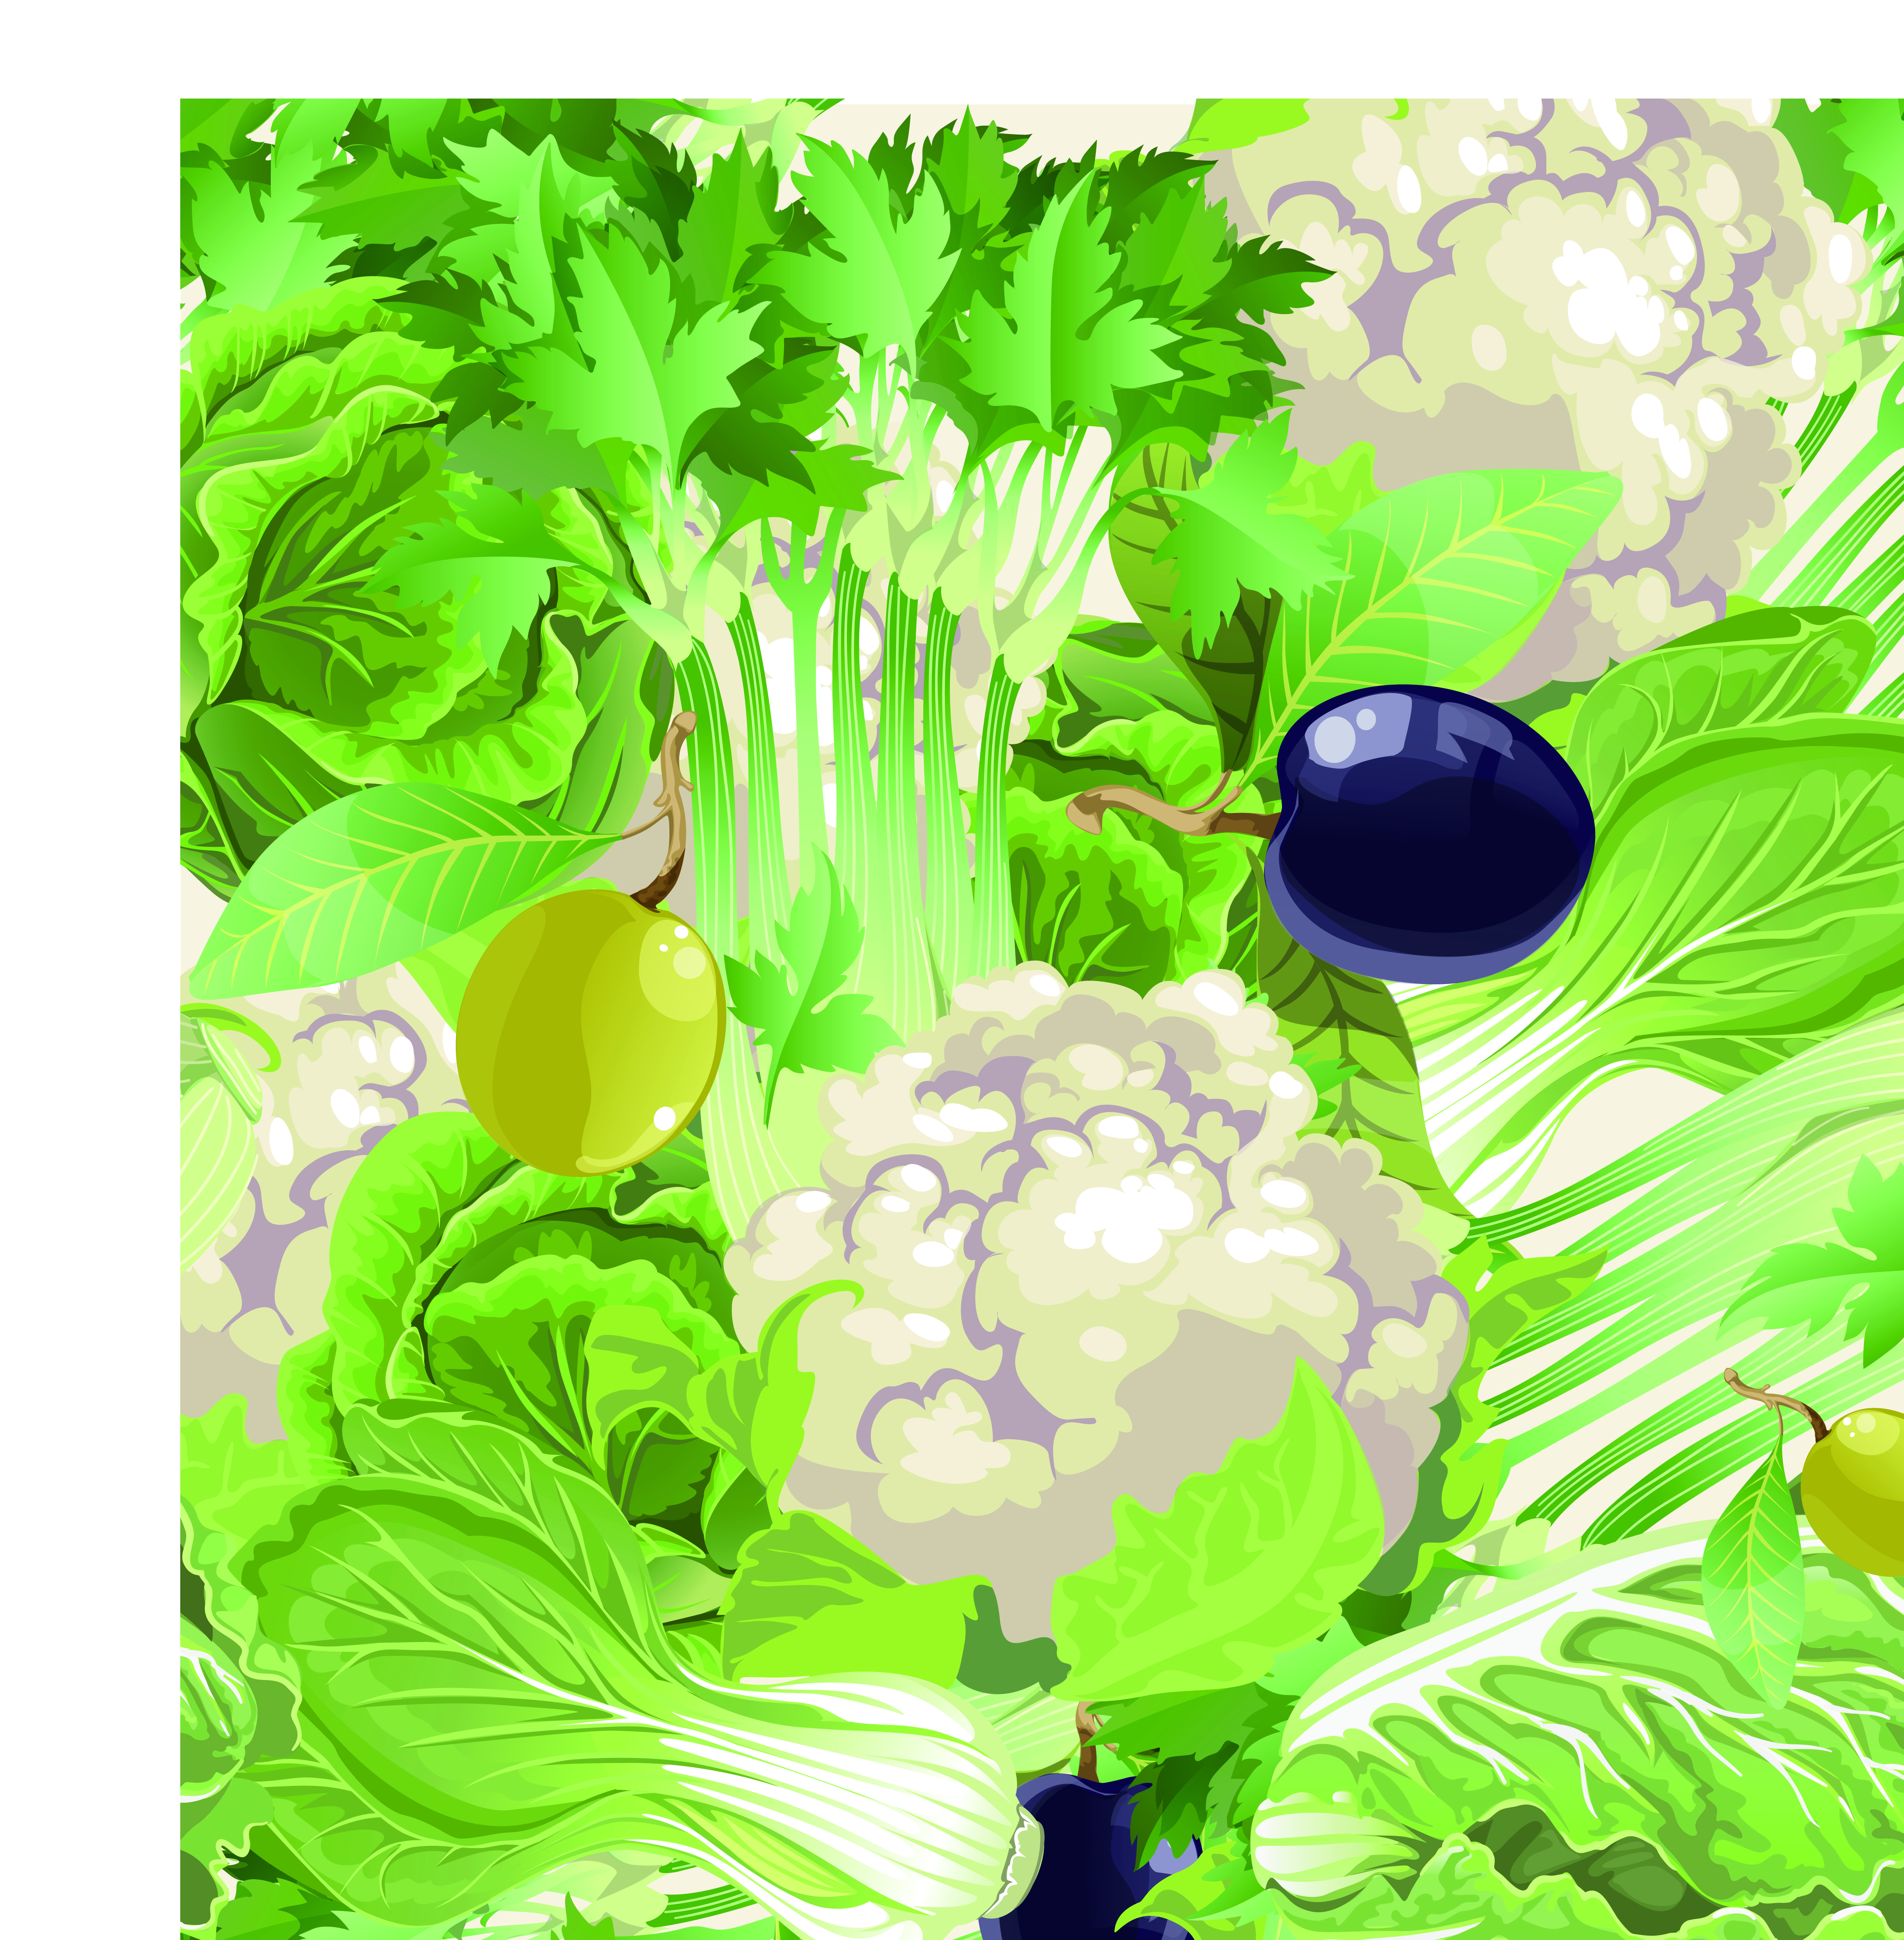 Vegetable mix vector background illustration